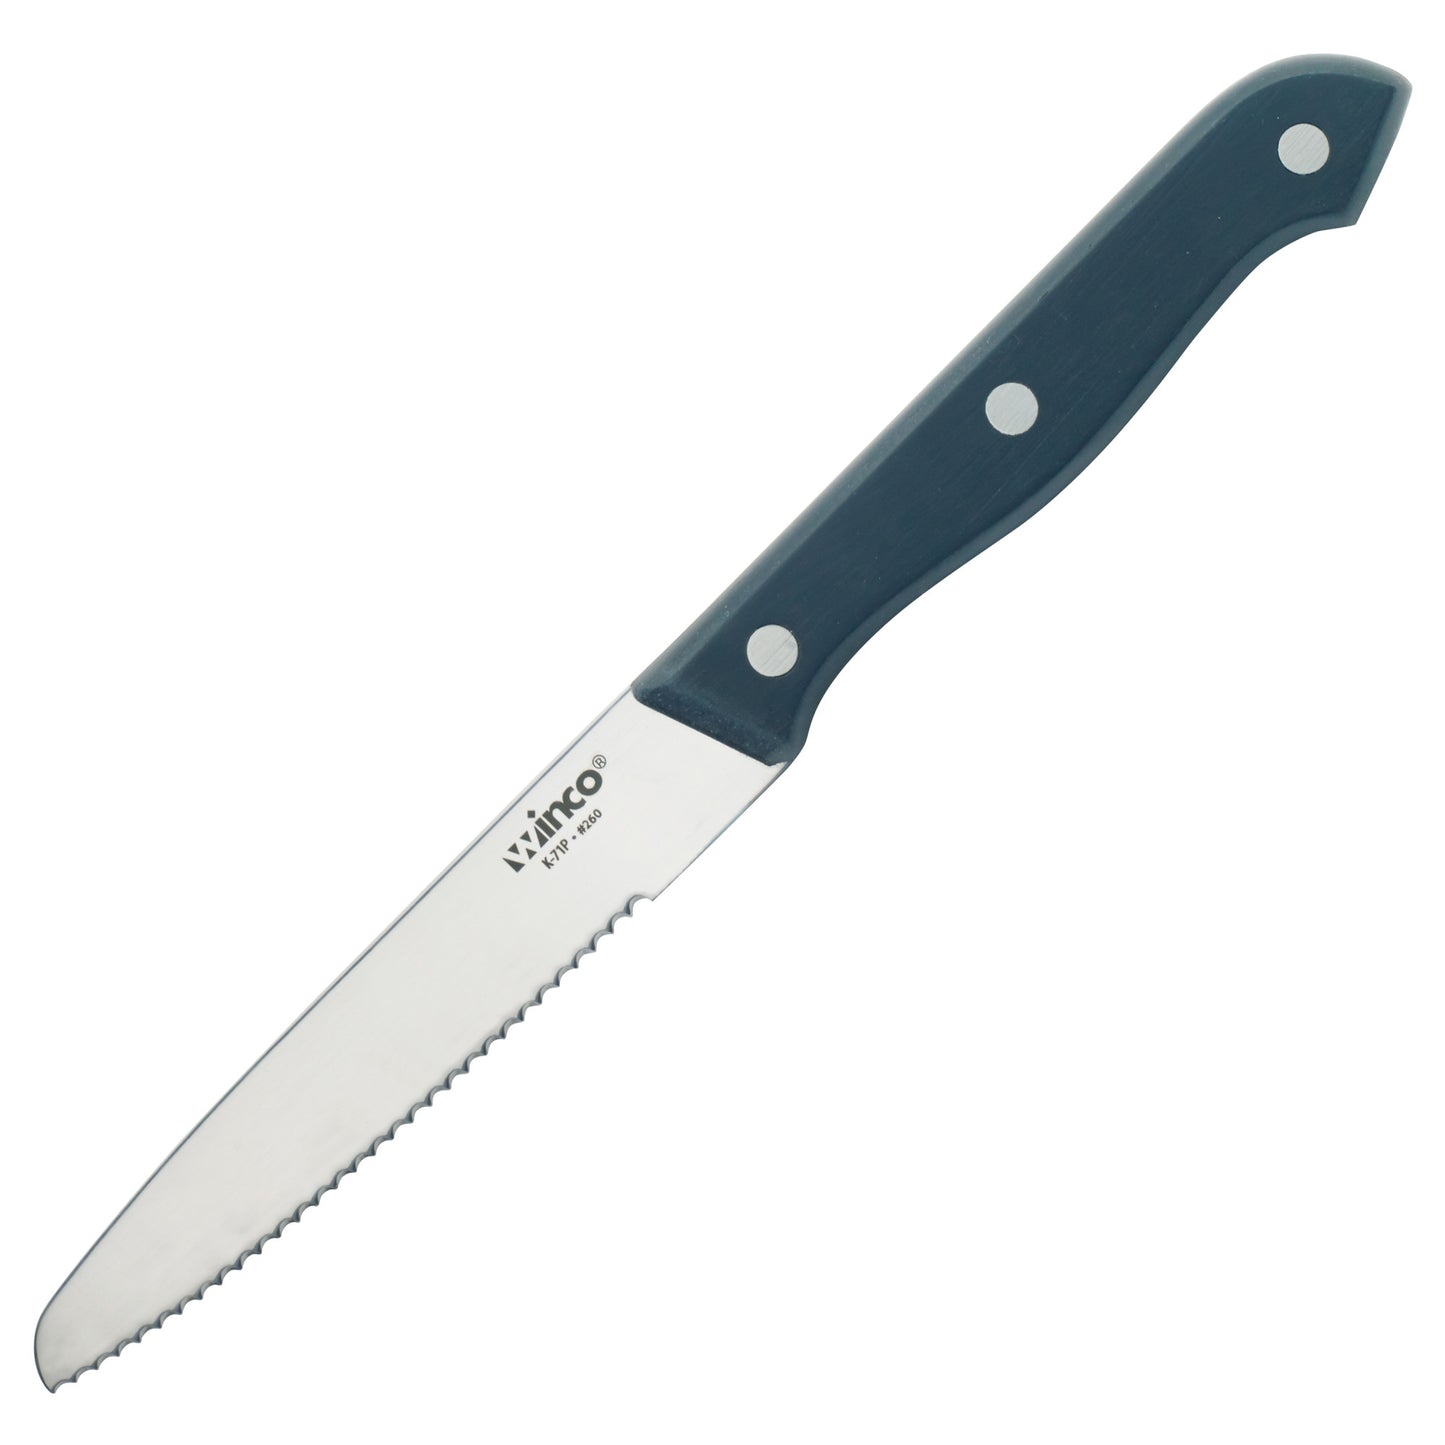 K-71P - Solid POM Handle Steak Knife, 4-1/2" Blade, Round Tip